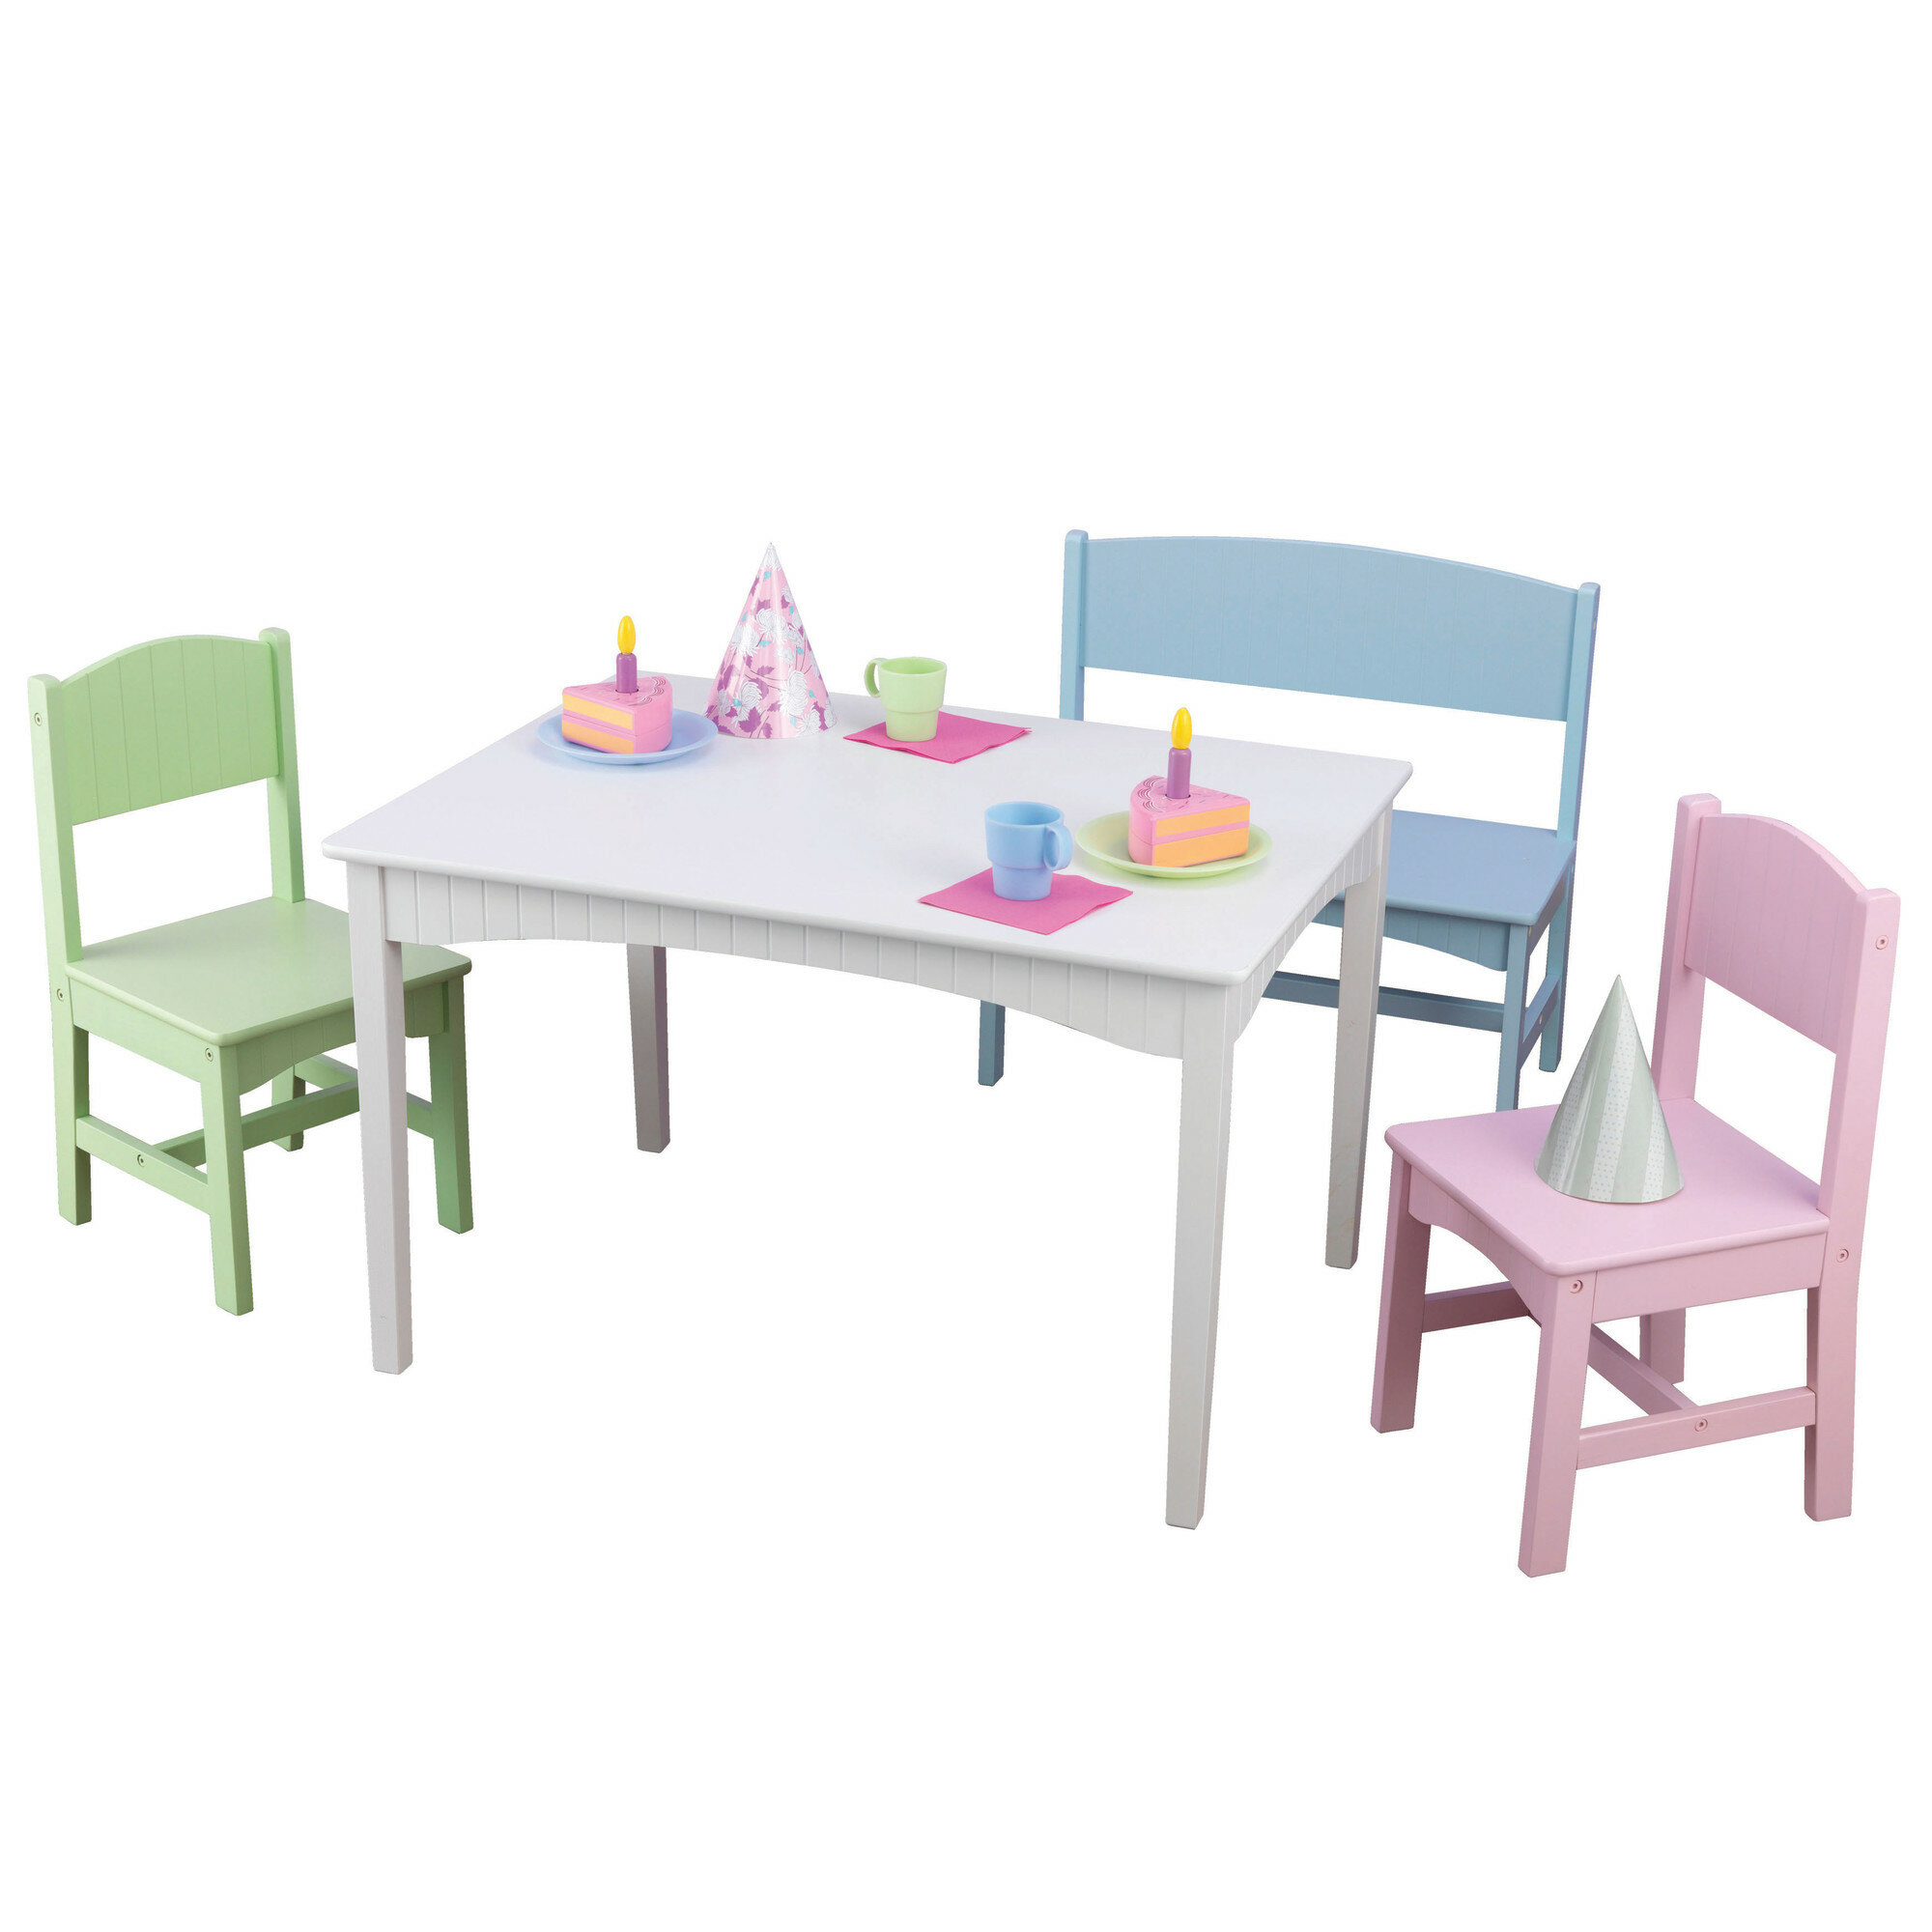 kidkraft star table and chair set